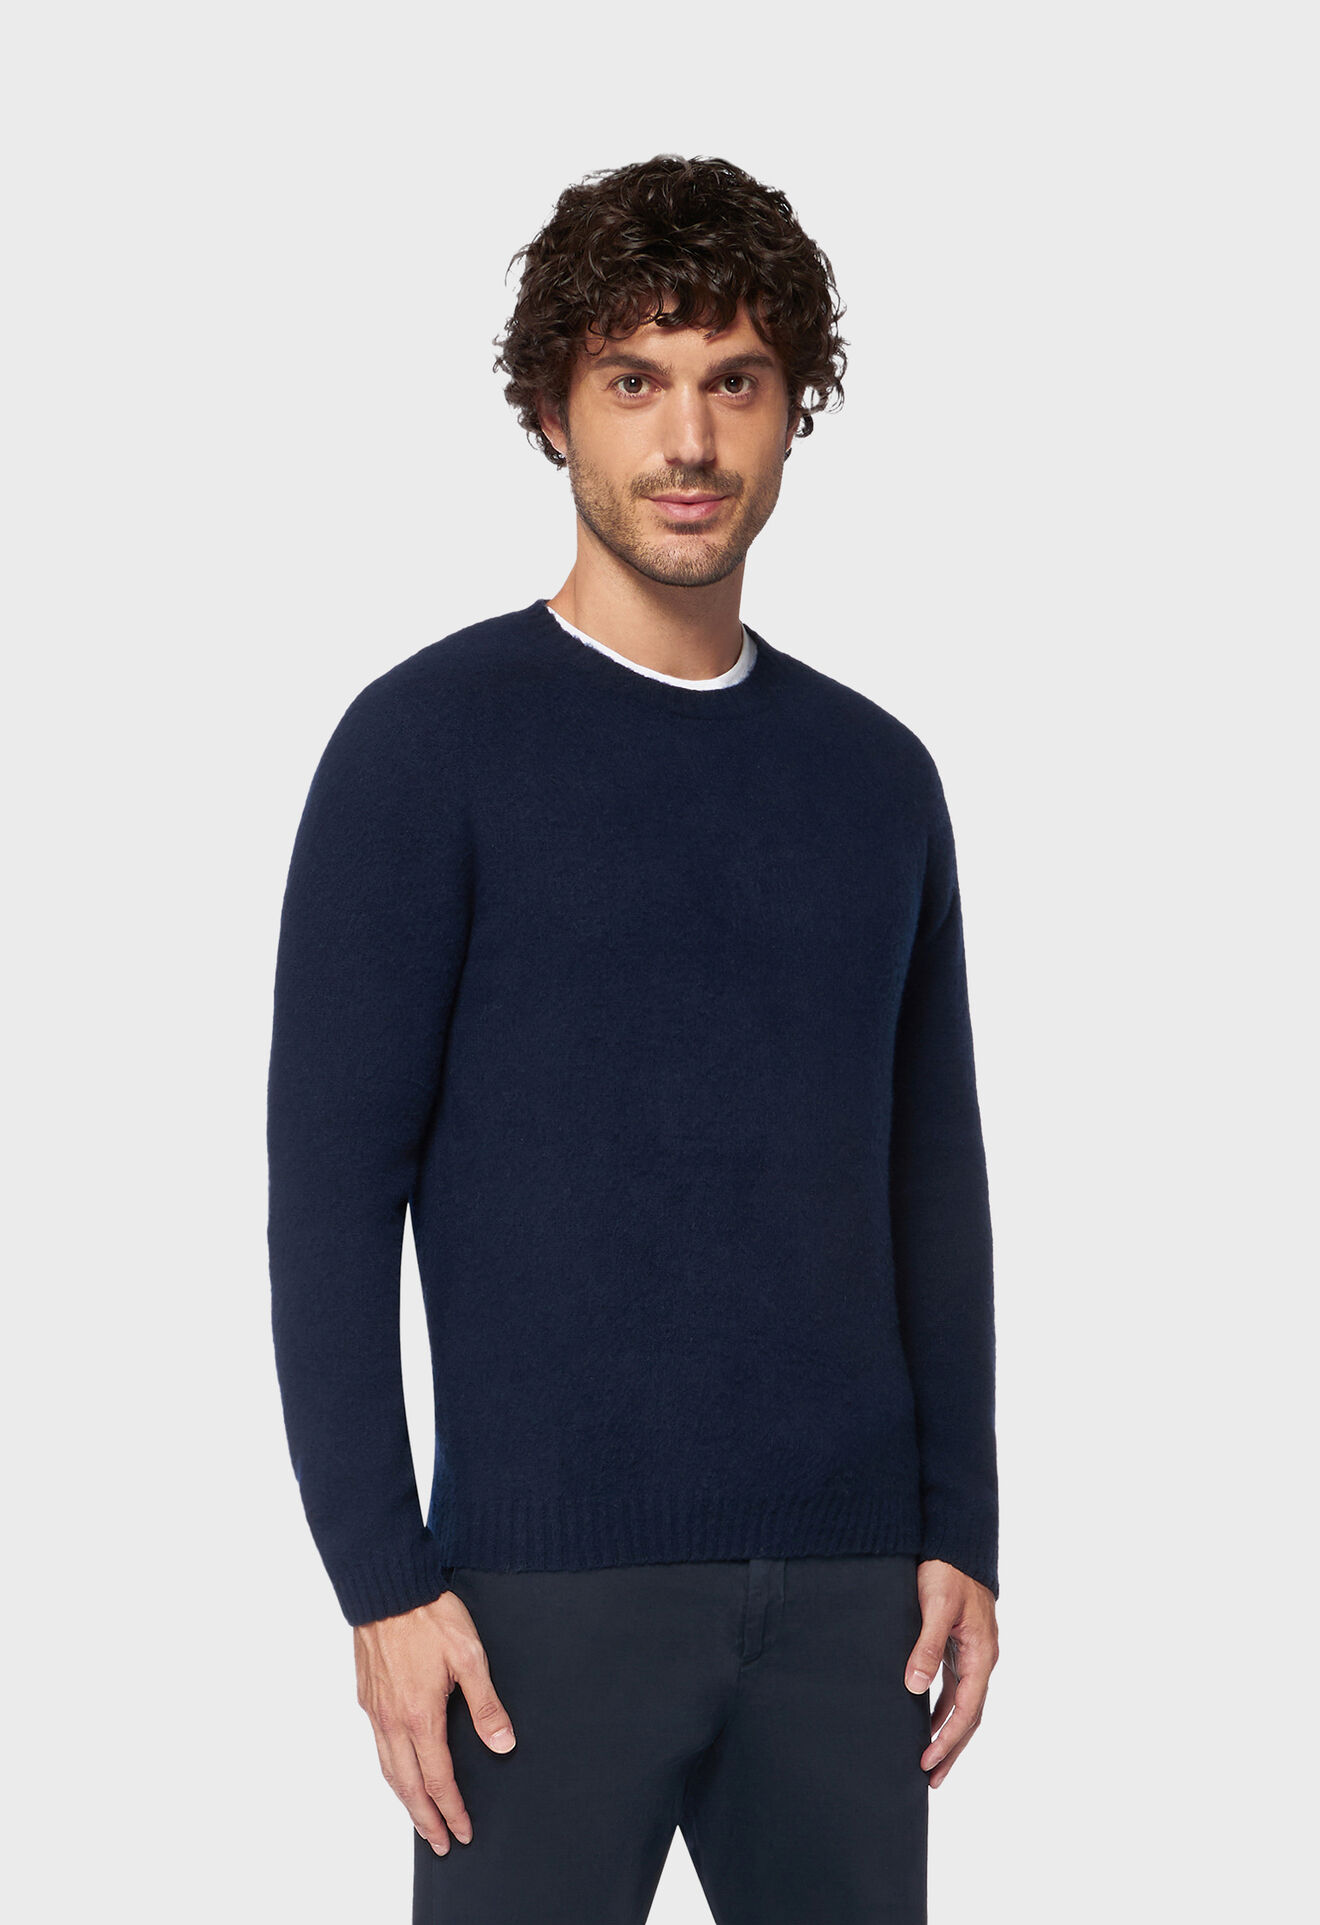 Wool and cashmere crewneck sweater in Dark blue: Luxury Italian Knitwear |  Boglioli®